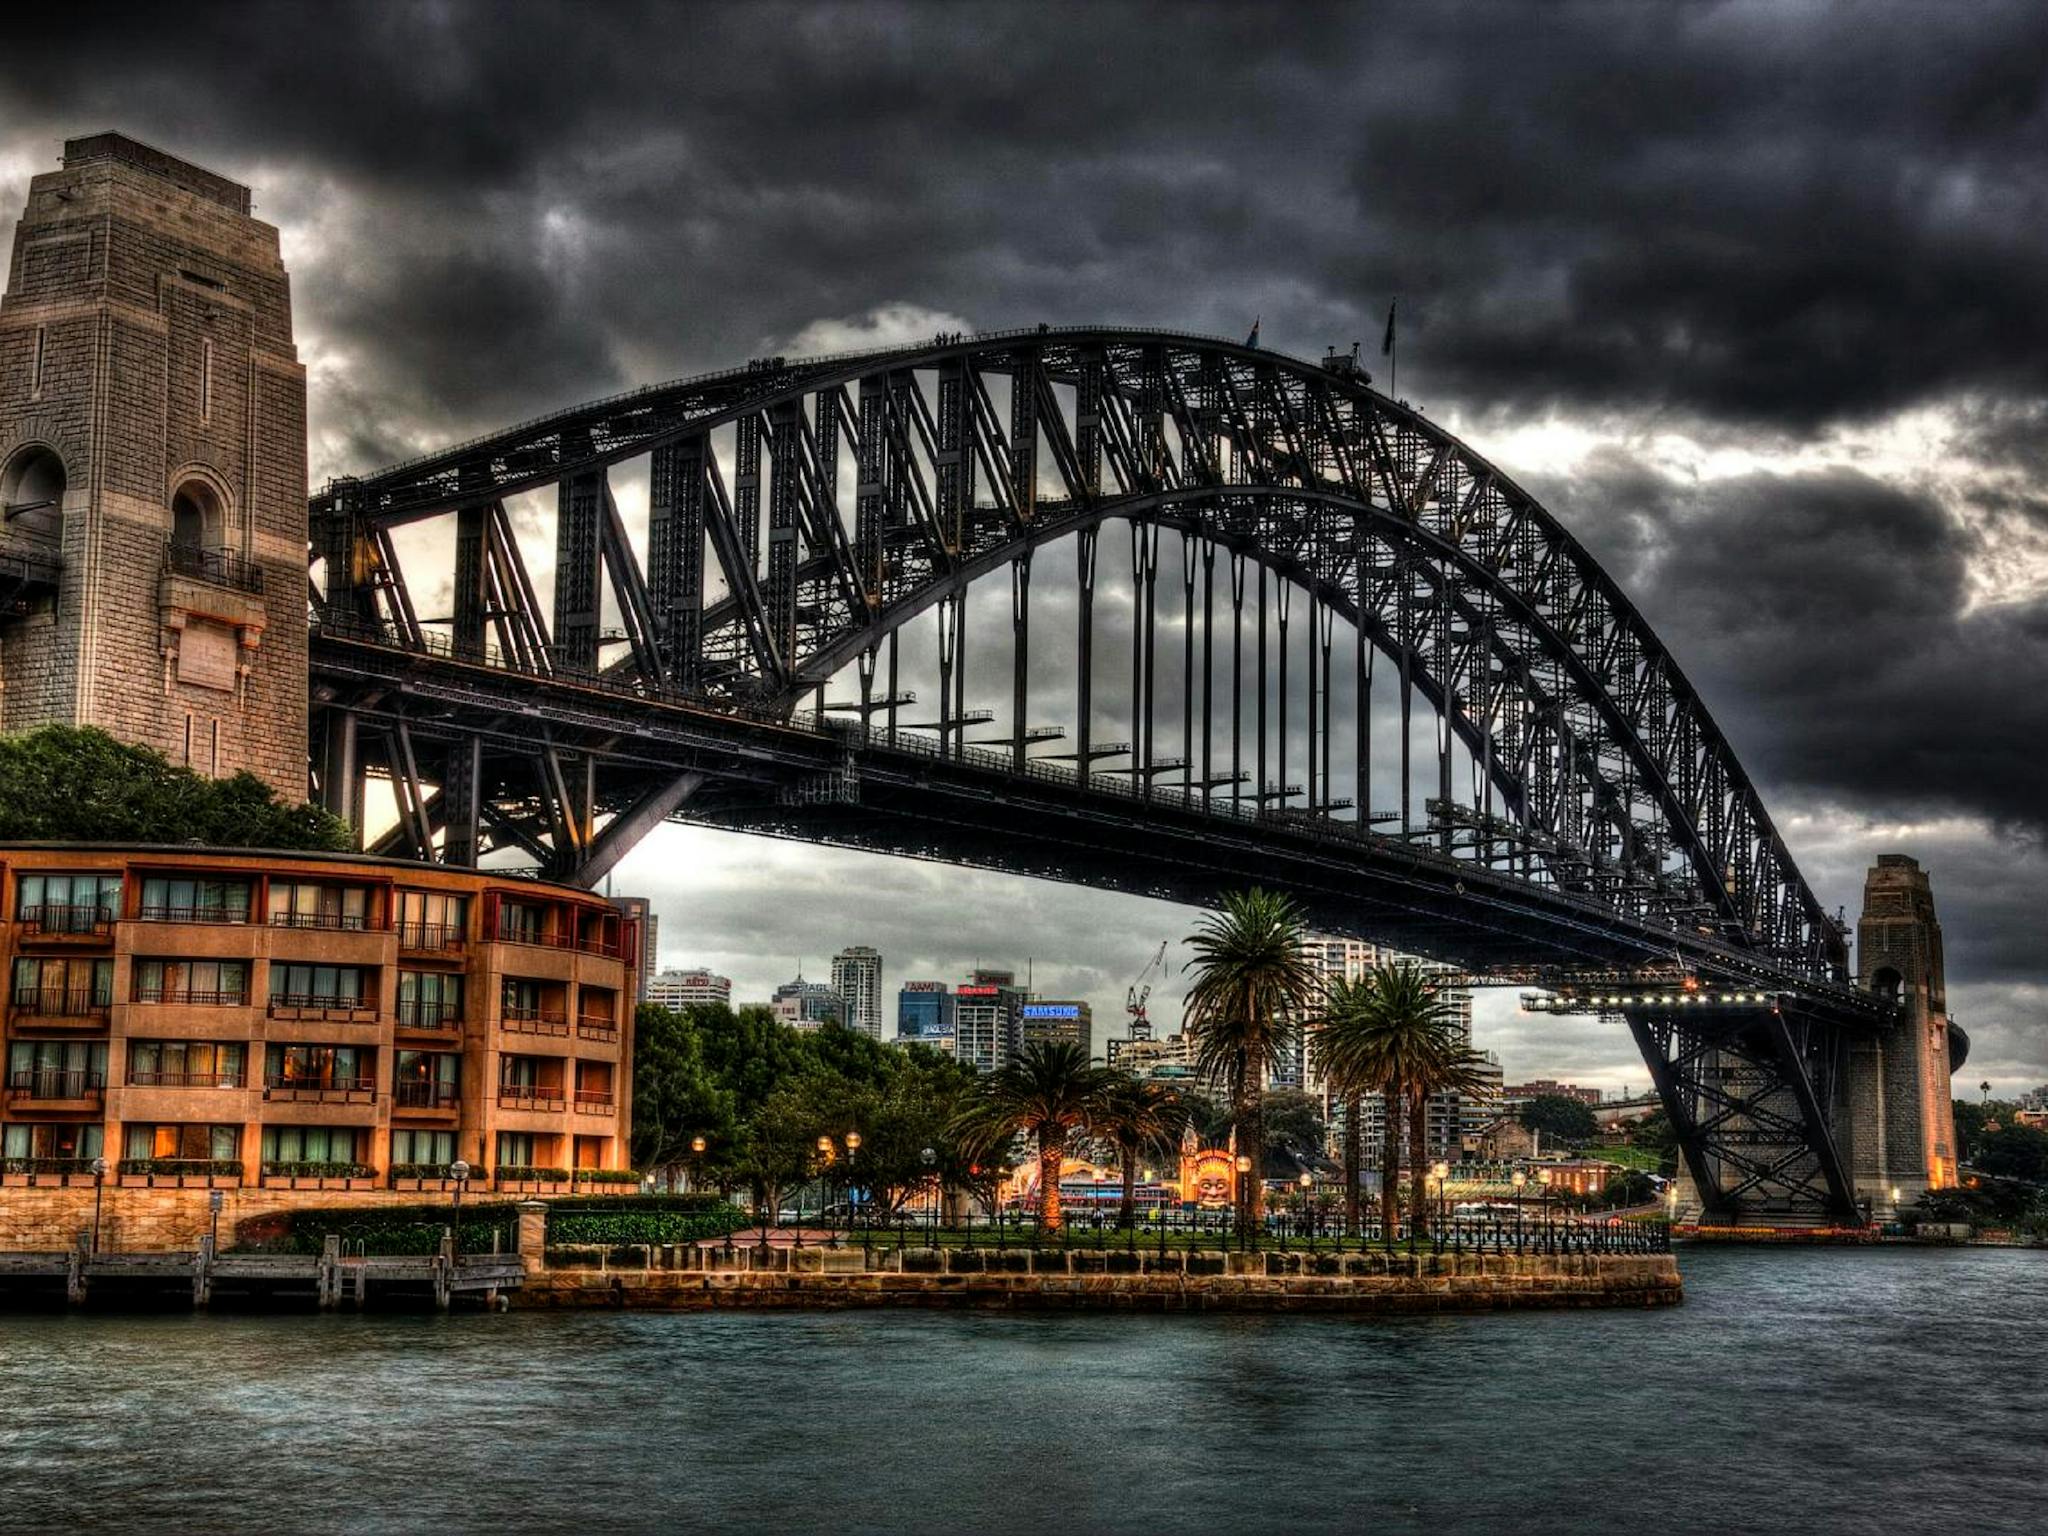 Harbour bridge. Харбор-бридж Сидней. Мост Харбор бридж. Сиднейский мост Харбор-бридж. Арочный мост Харбор-бридж.